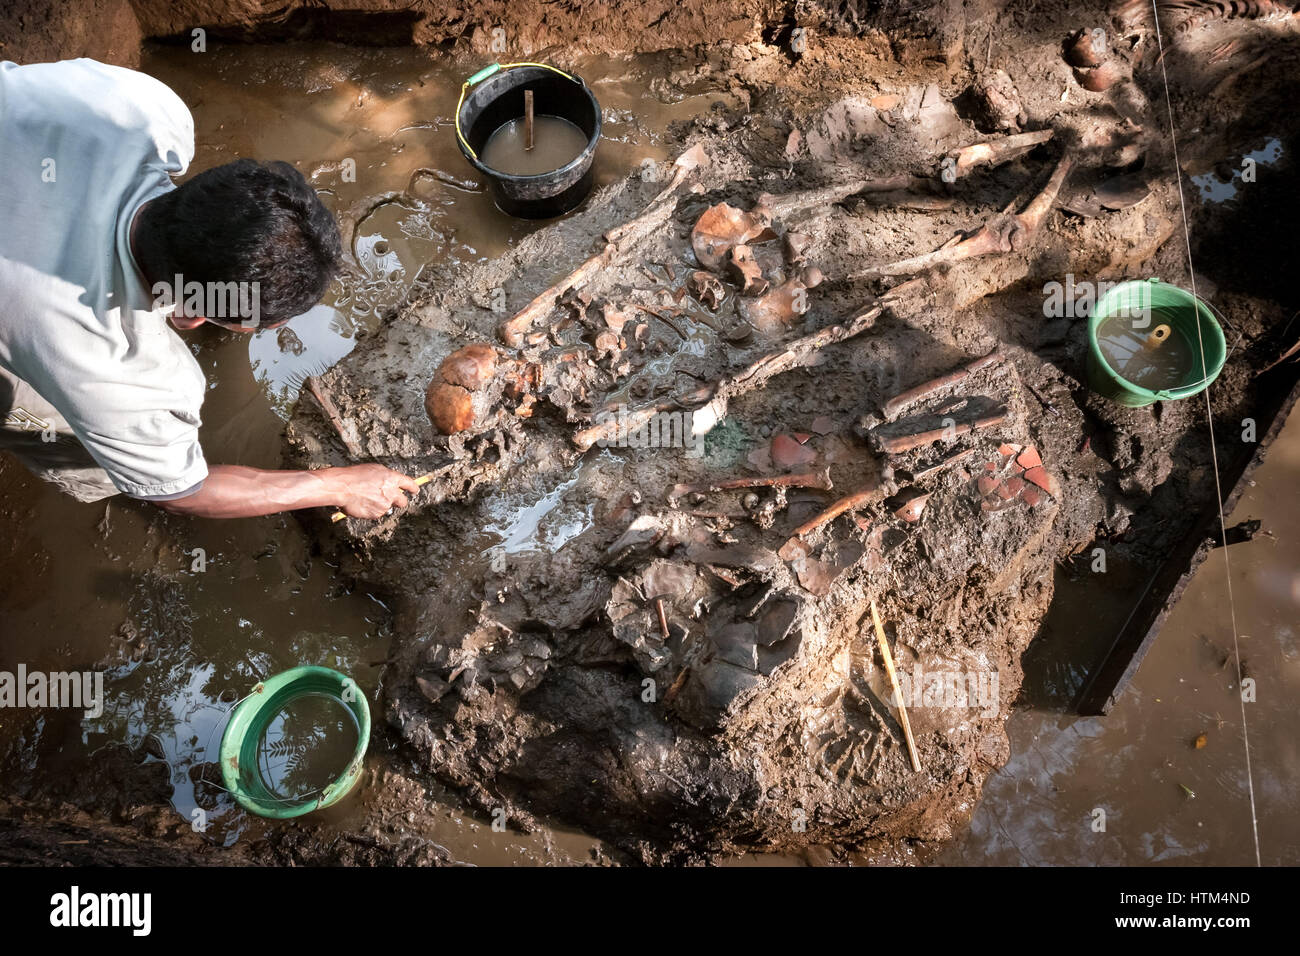 A man cleans exposed prehistoric human bones and skulls during excavation of a prehistoric burial site in Tempuran, Karawang, West Java, Indonesia. Stock Photo